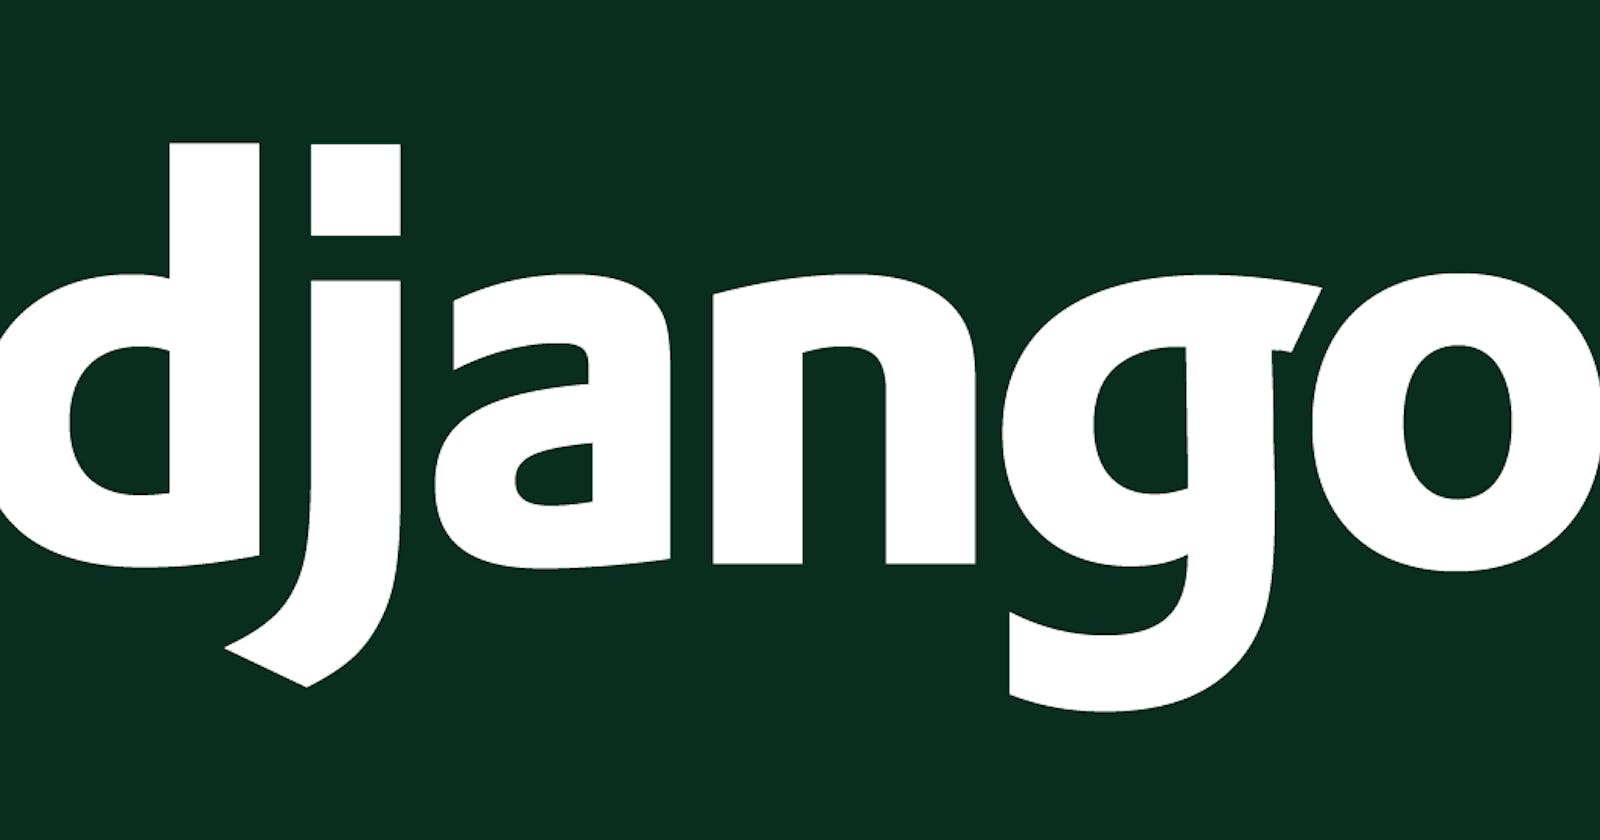 Building a To-Do List App with Django